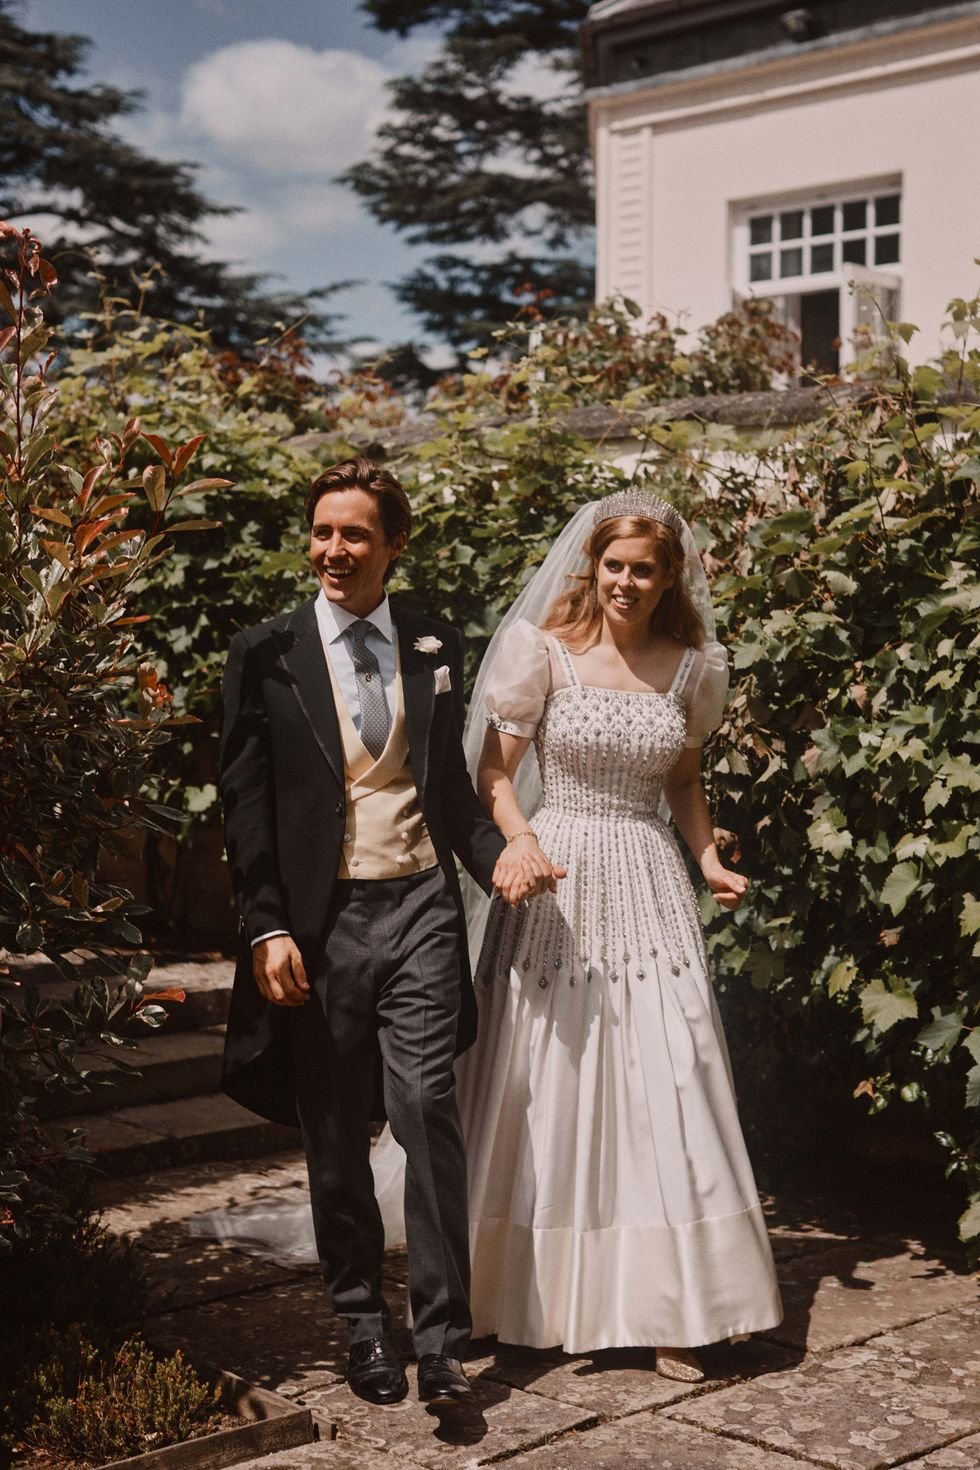 Sophie Turner's Wedding Dress Is Finally Revealed: Get the Details